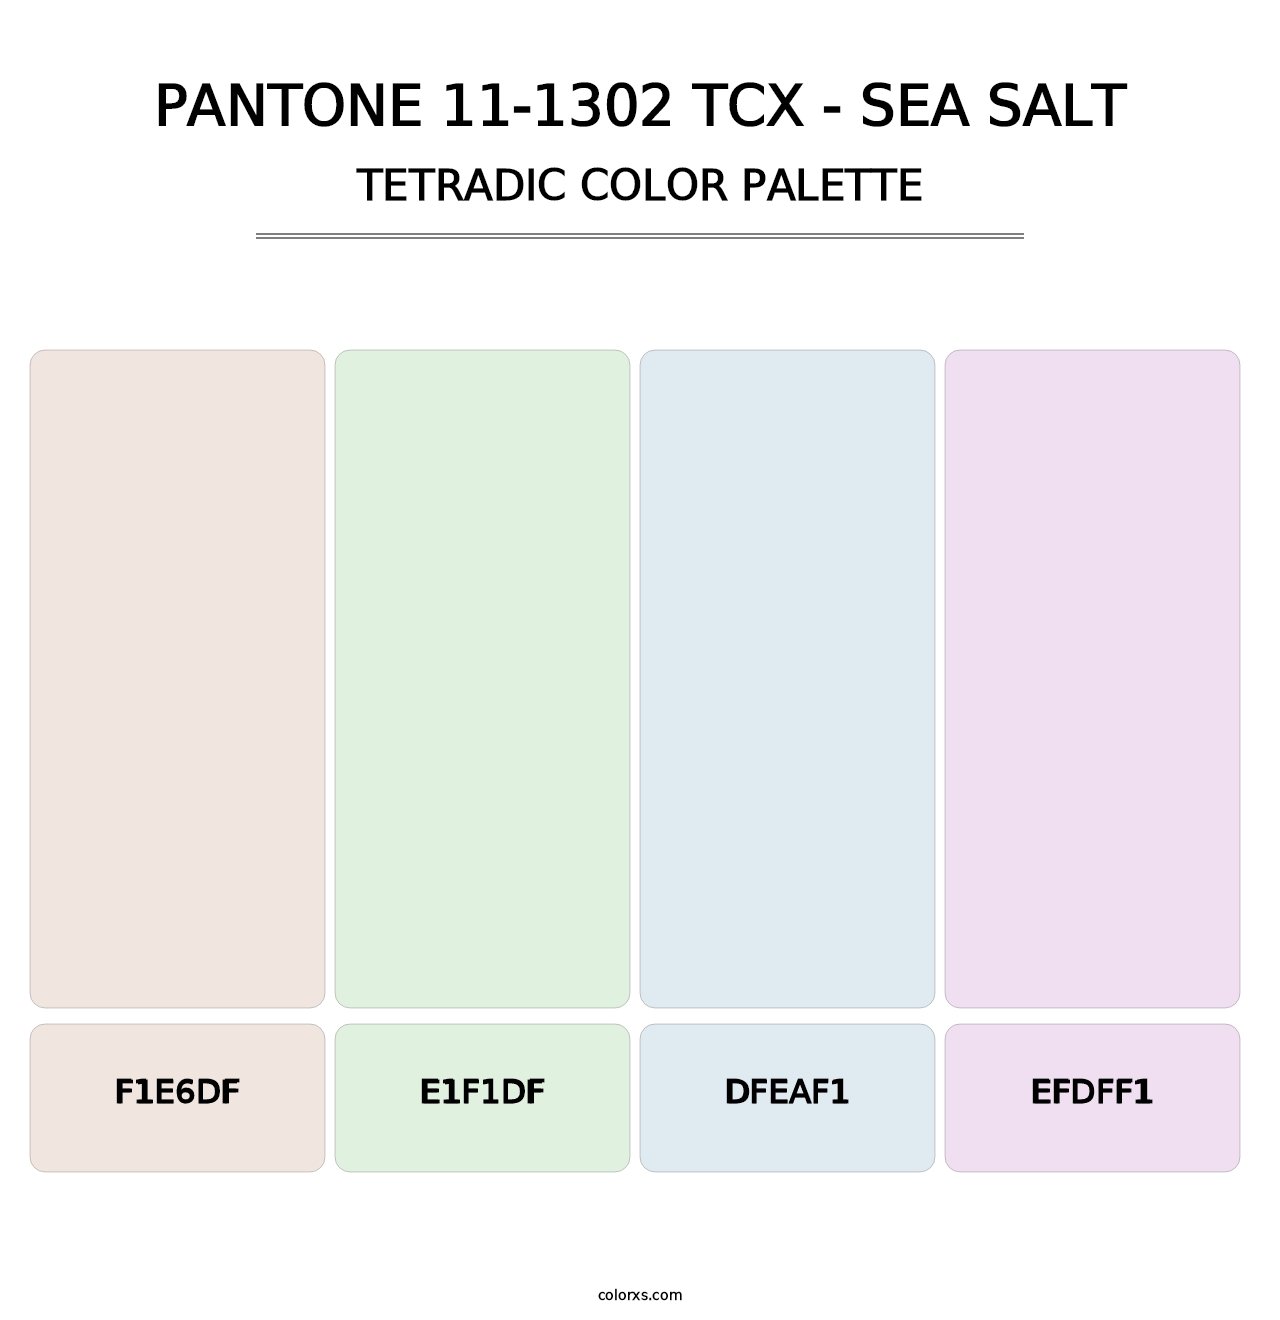 PANTONE 11-1302 TCX - Sea Salt - Tetradic Color Palette